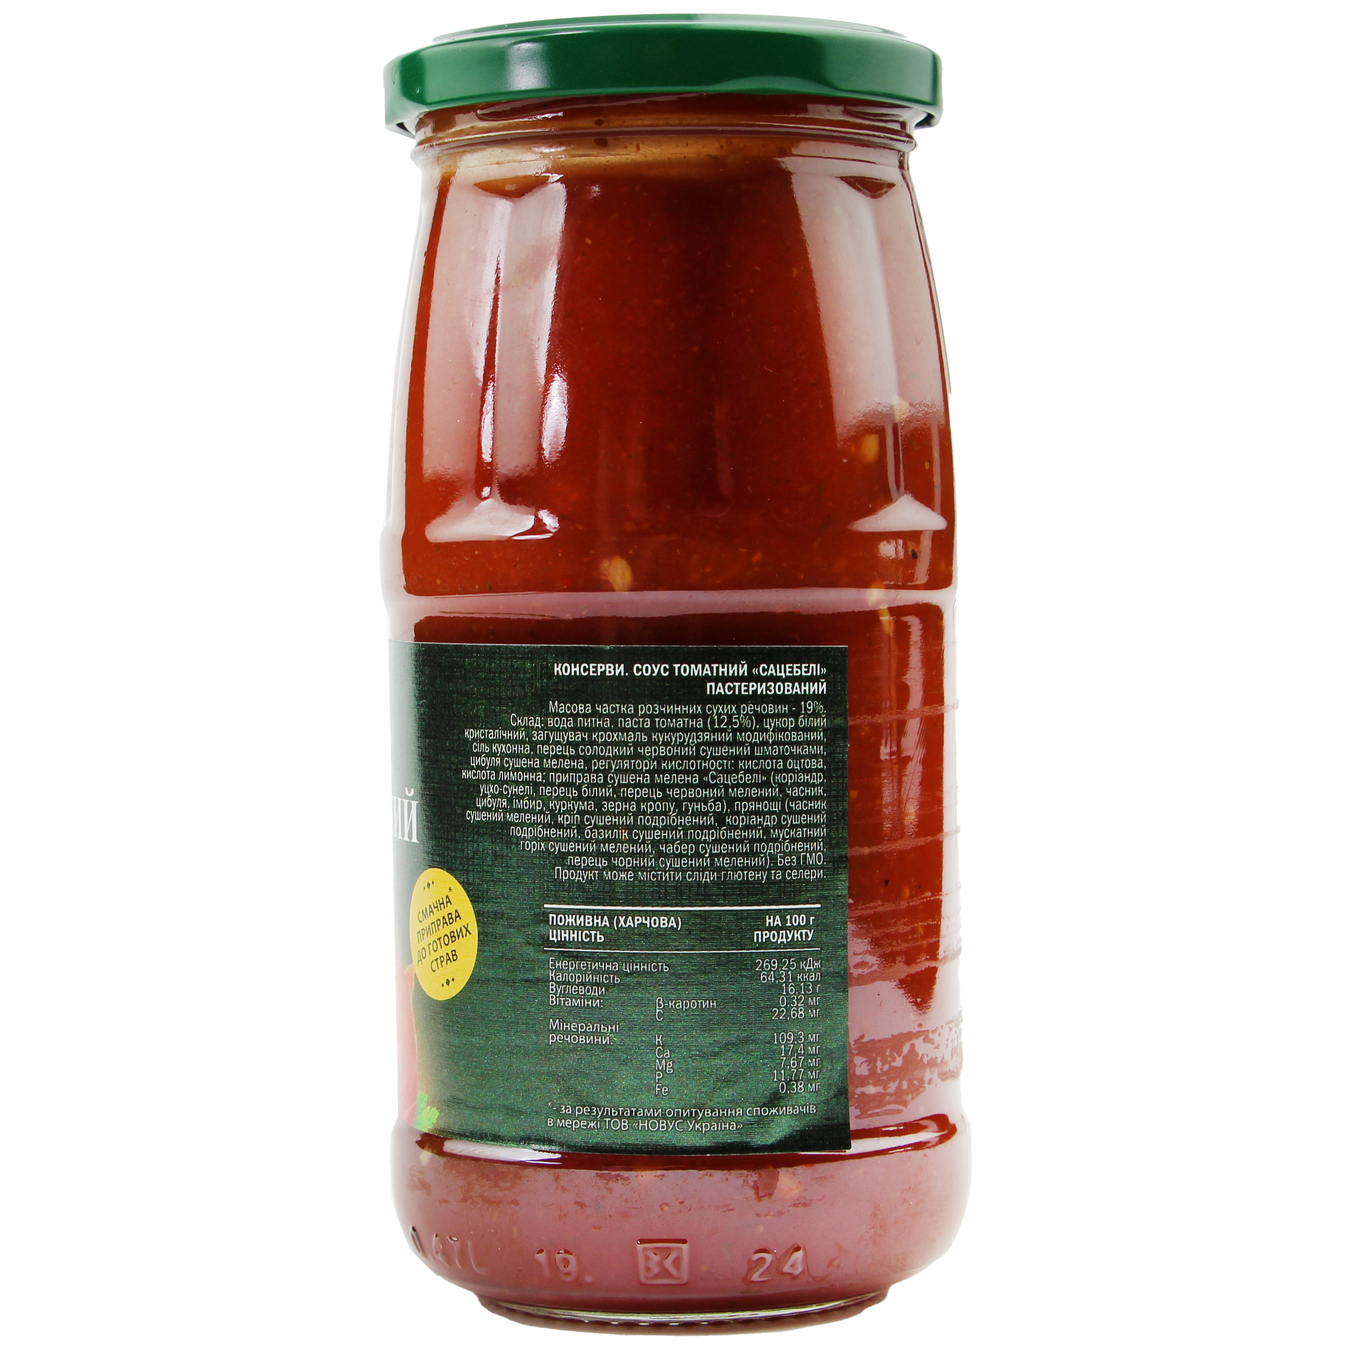 NOVUS Satsebeli Tomato Sauce 480g 2